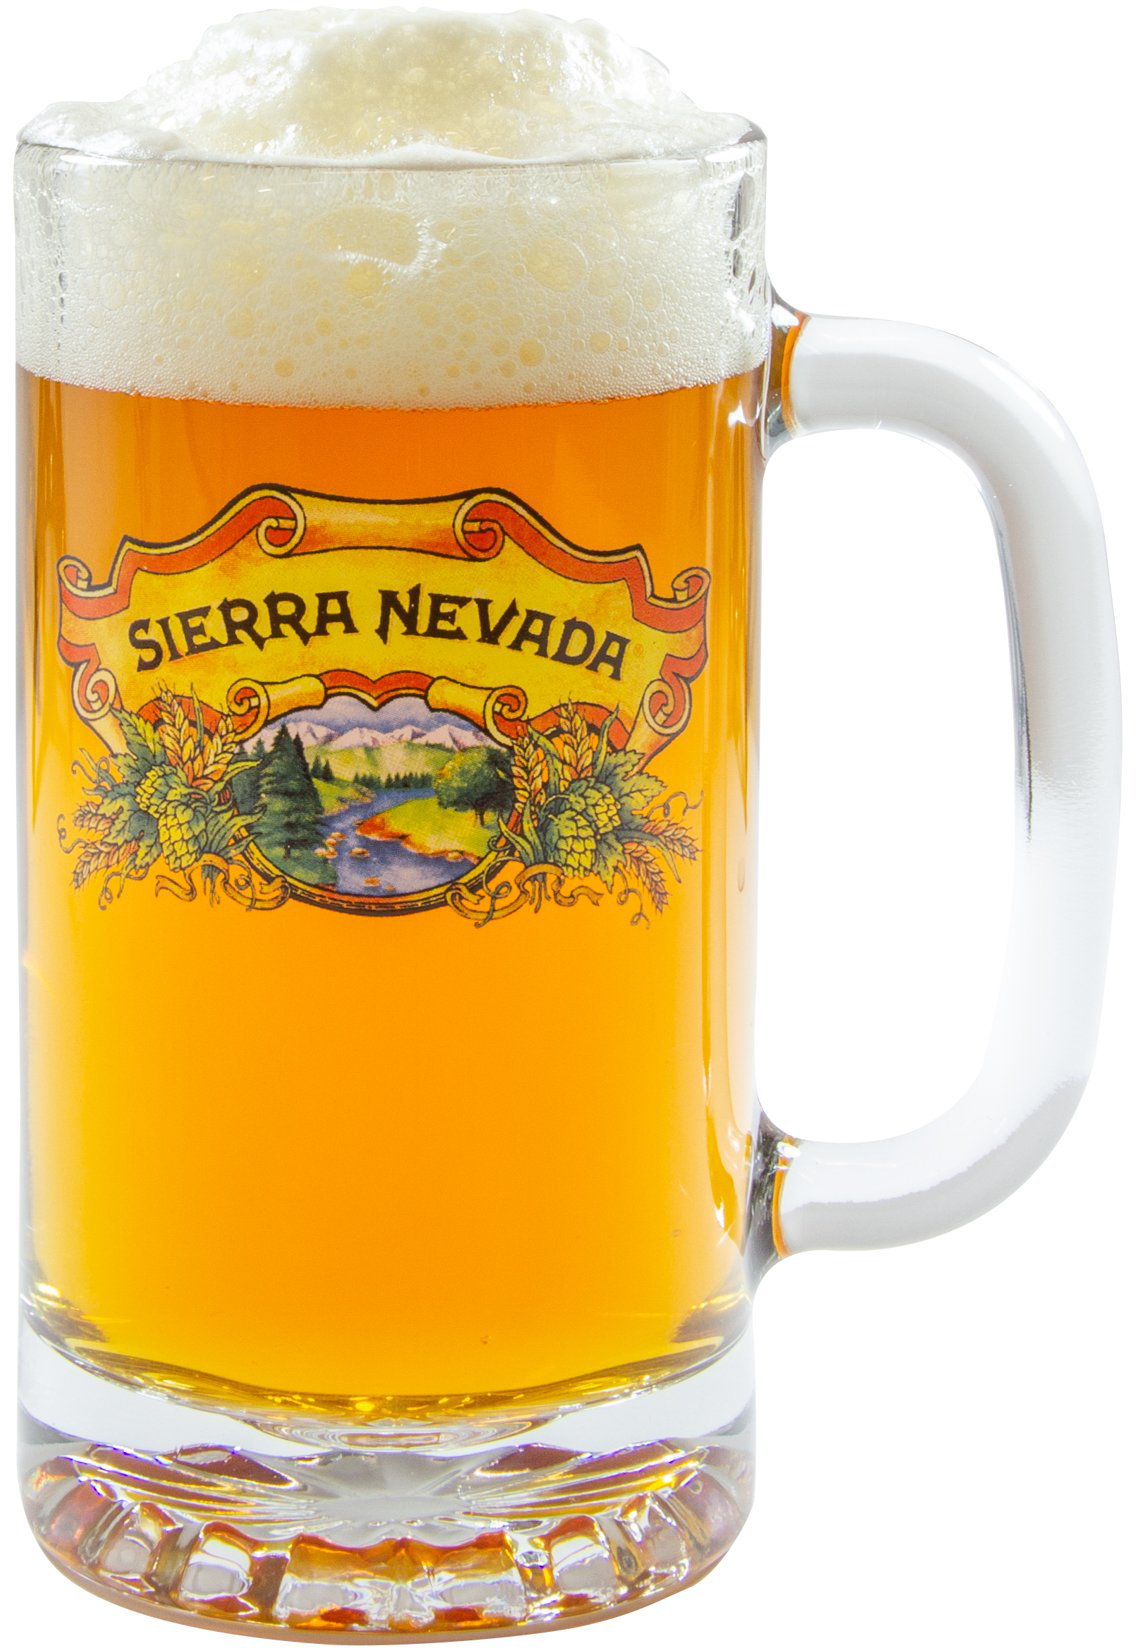 Sierra Nevada tankard mug